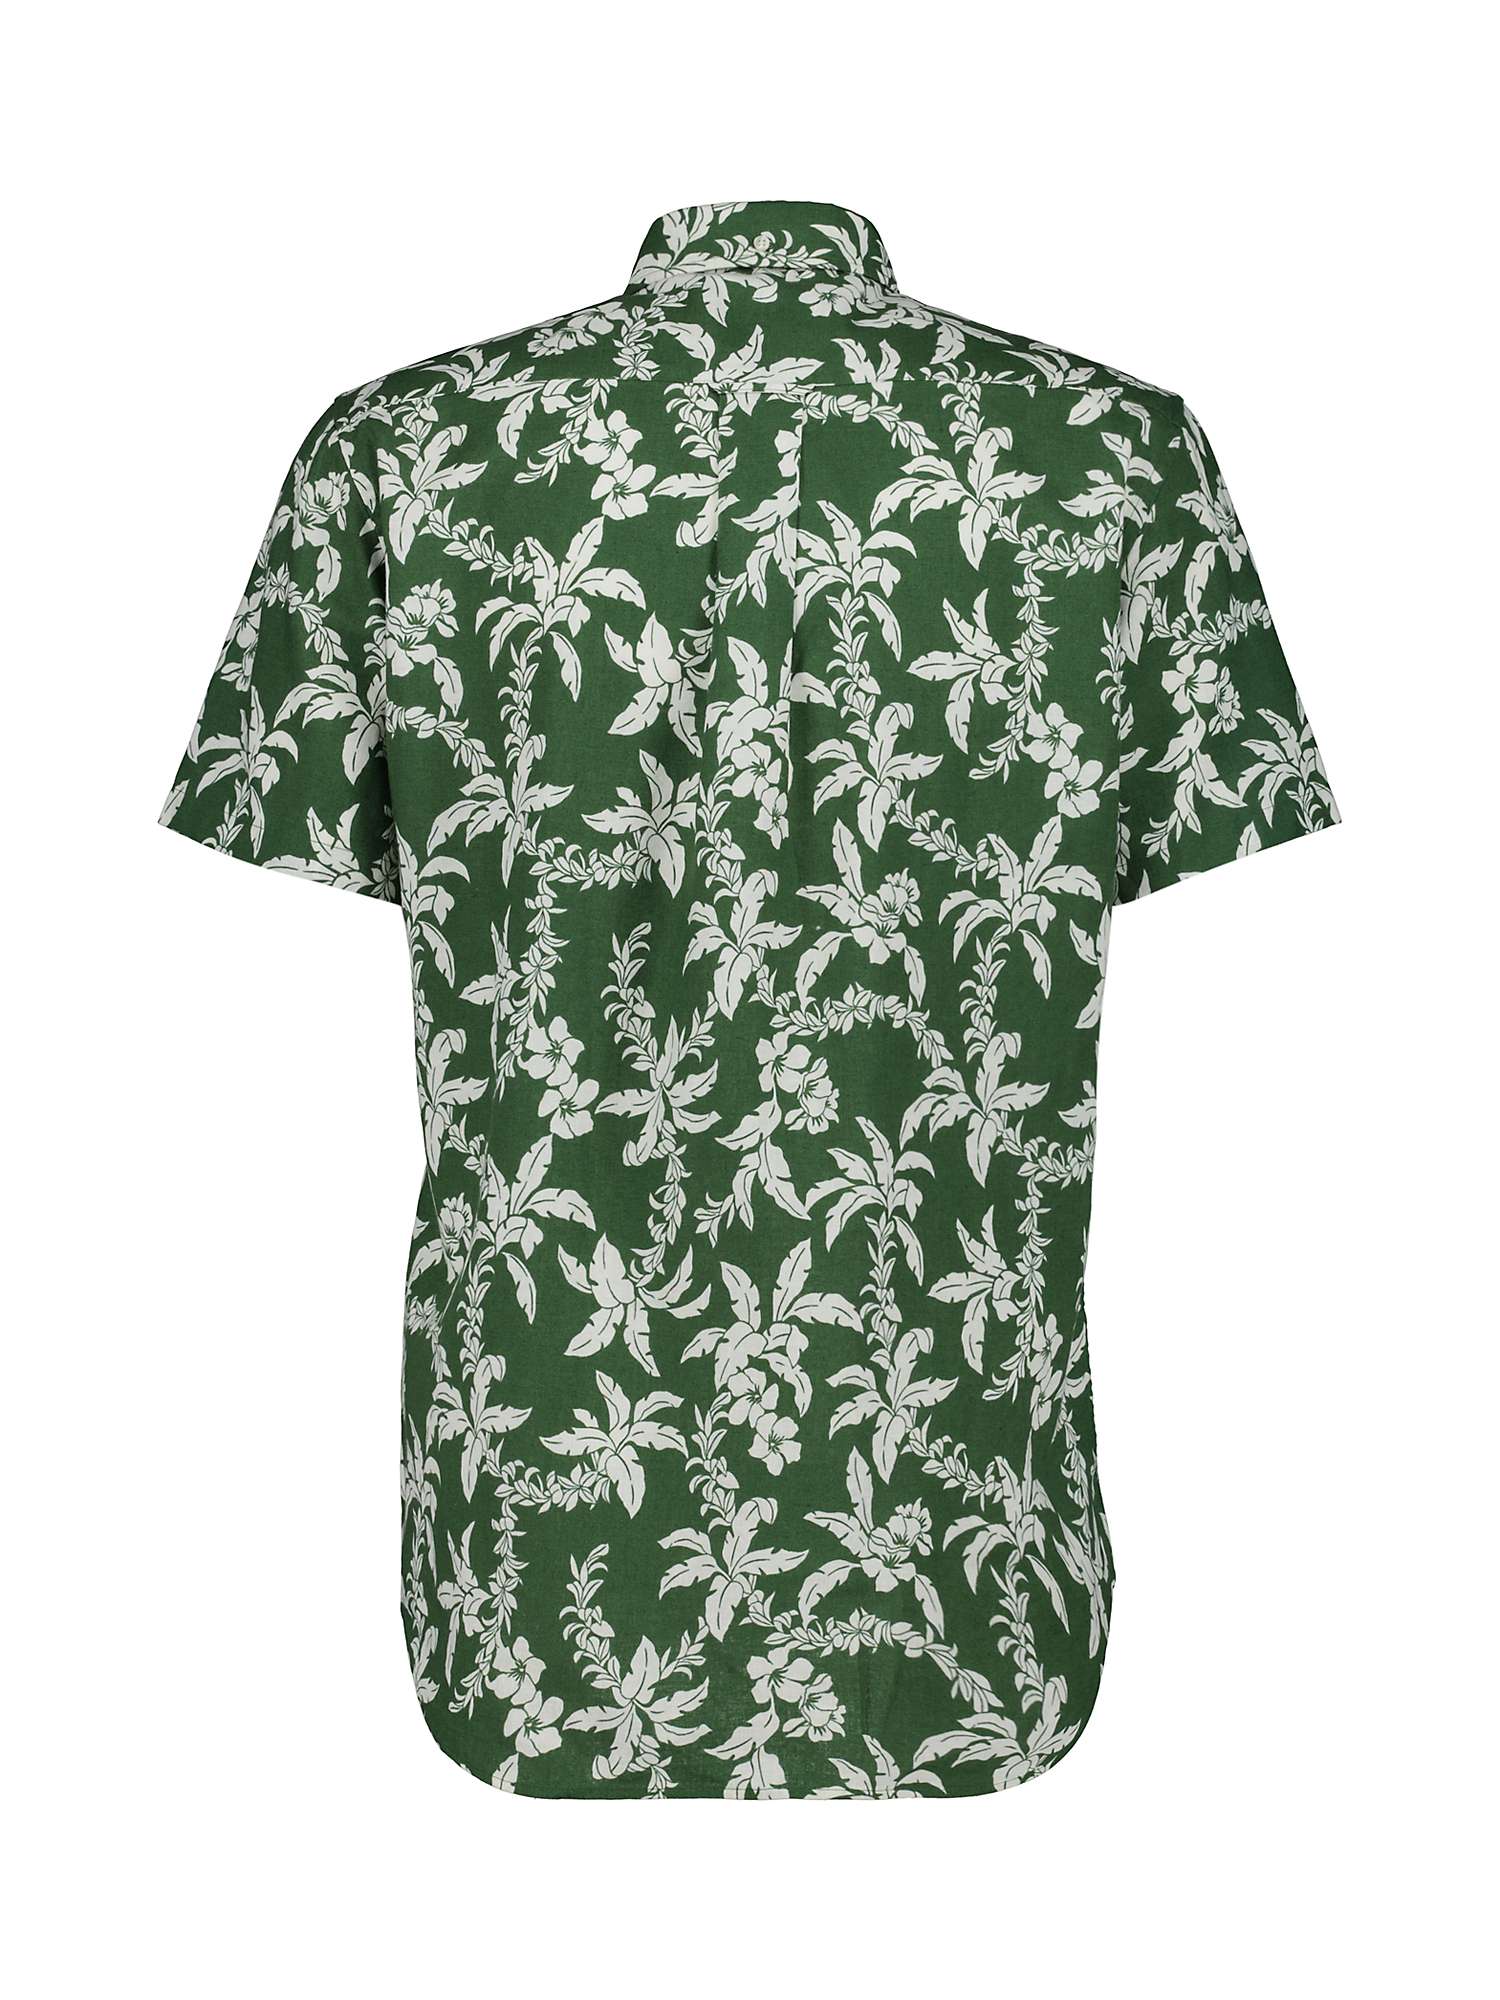 Buy GANT All Over Palm Print Short Sleeve Shirt, Green/Multi Online at johnlewis.com